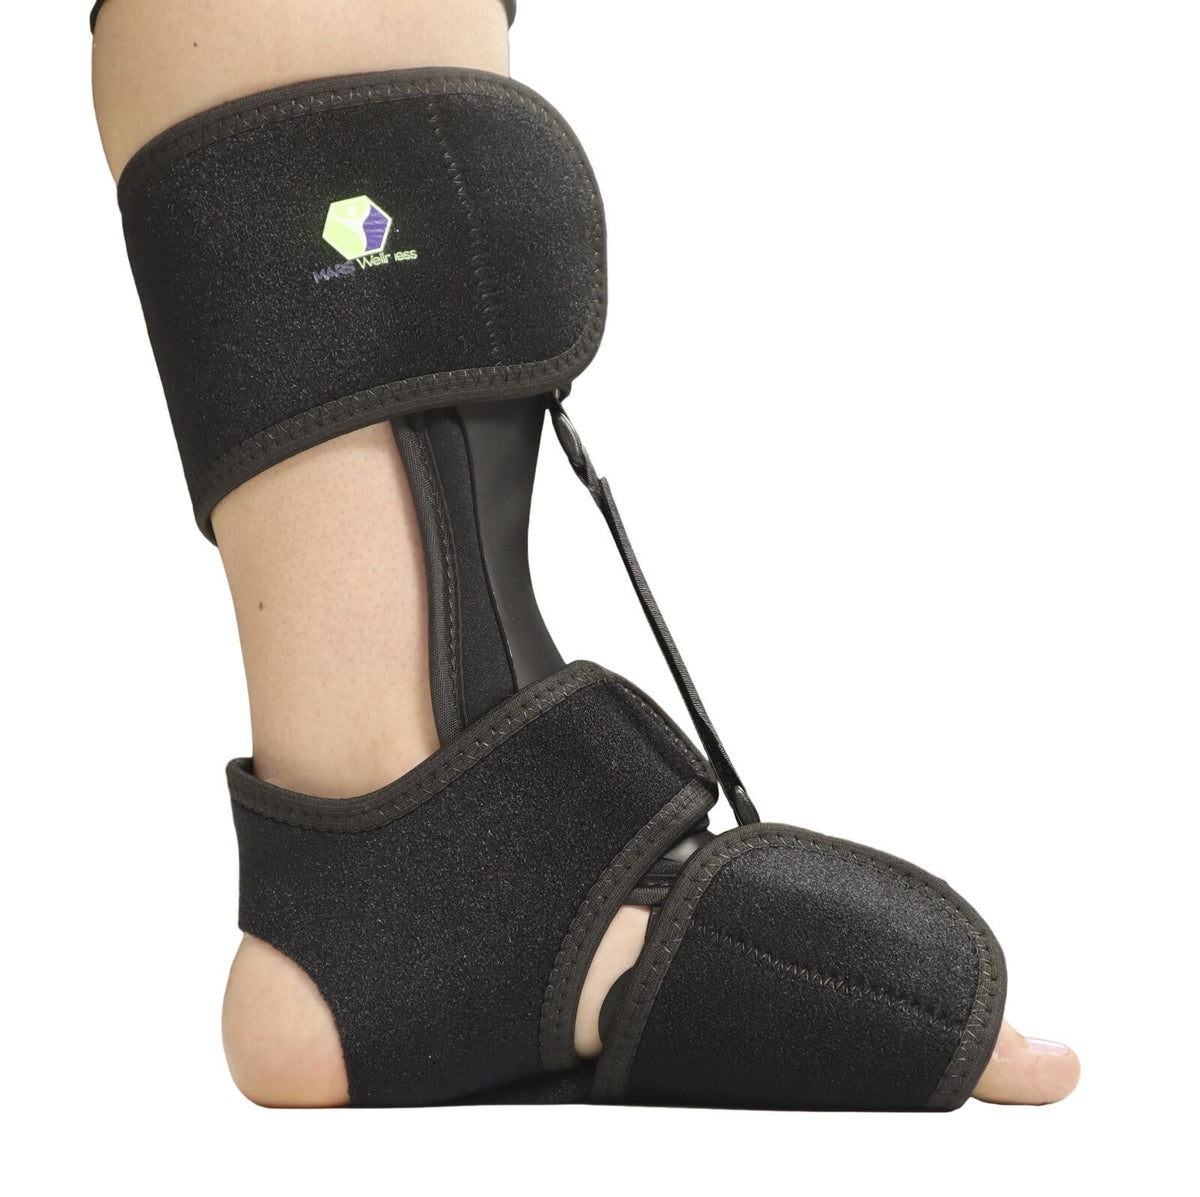 Comfort Dorsal Night Splint - Pain Relief from Plantar Fasciitis, Drop Foot, and Achilles Tendinitis